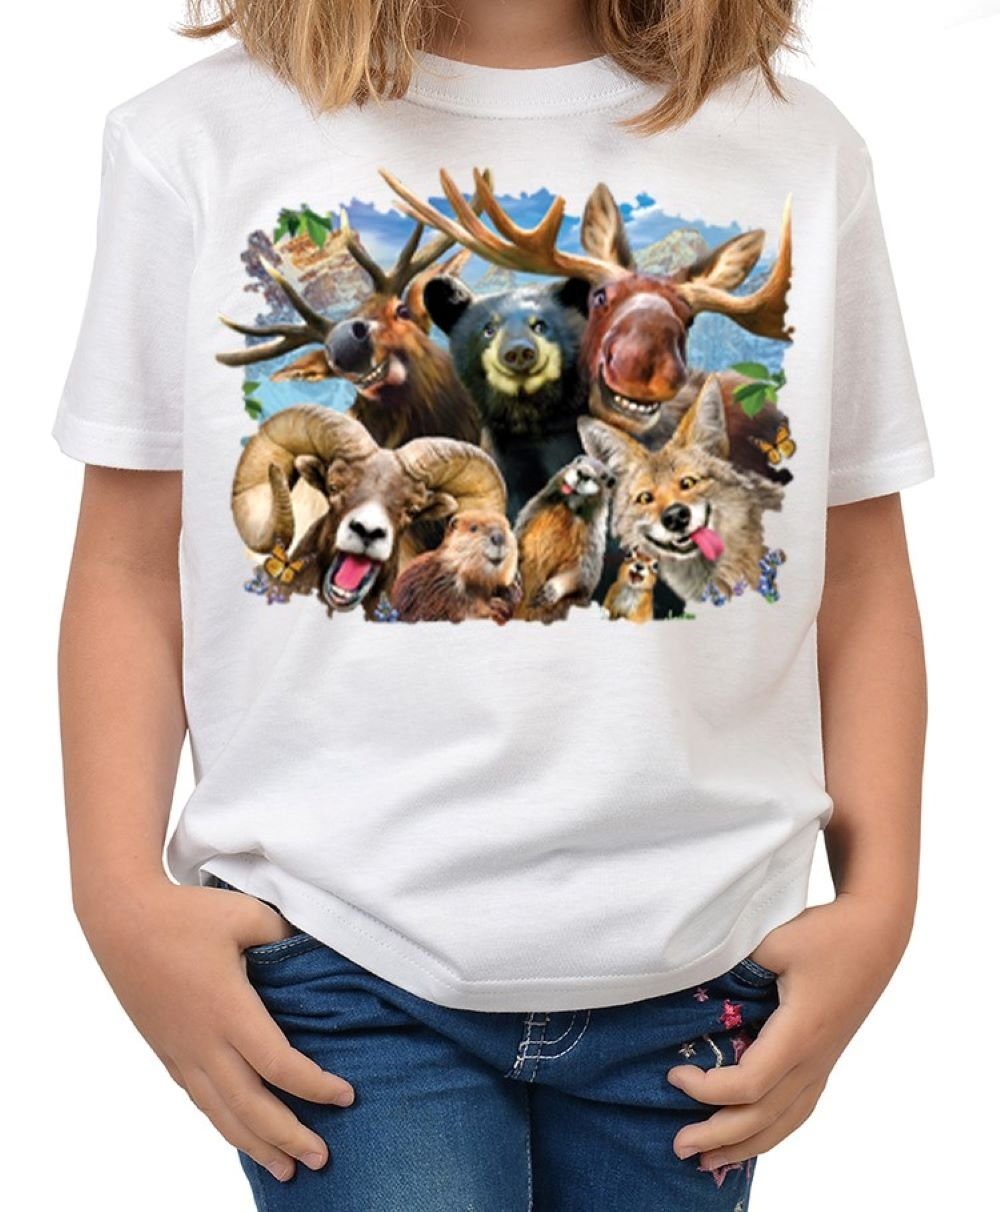 Tini - Shirts T-Shirt Wildtier Motiv Kindershirt lustiges Wildtier Motiv - buntes Elch / Hirsch / Bär Foto - Tier-Selfie : Selfie Rocky Mountain